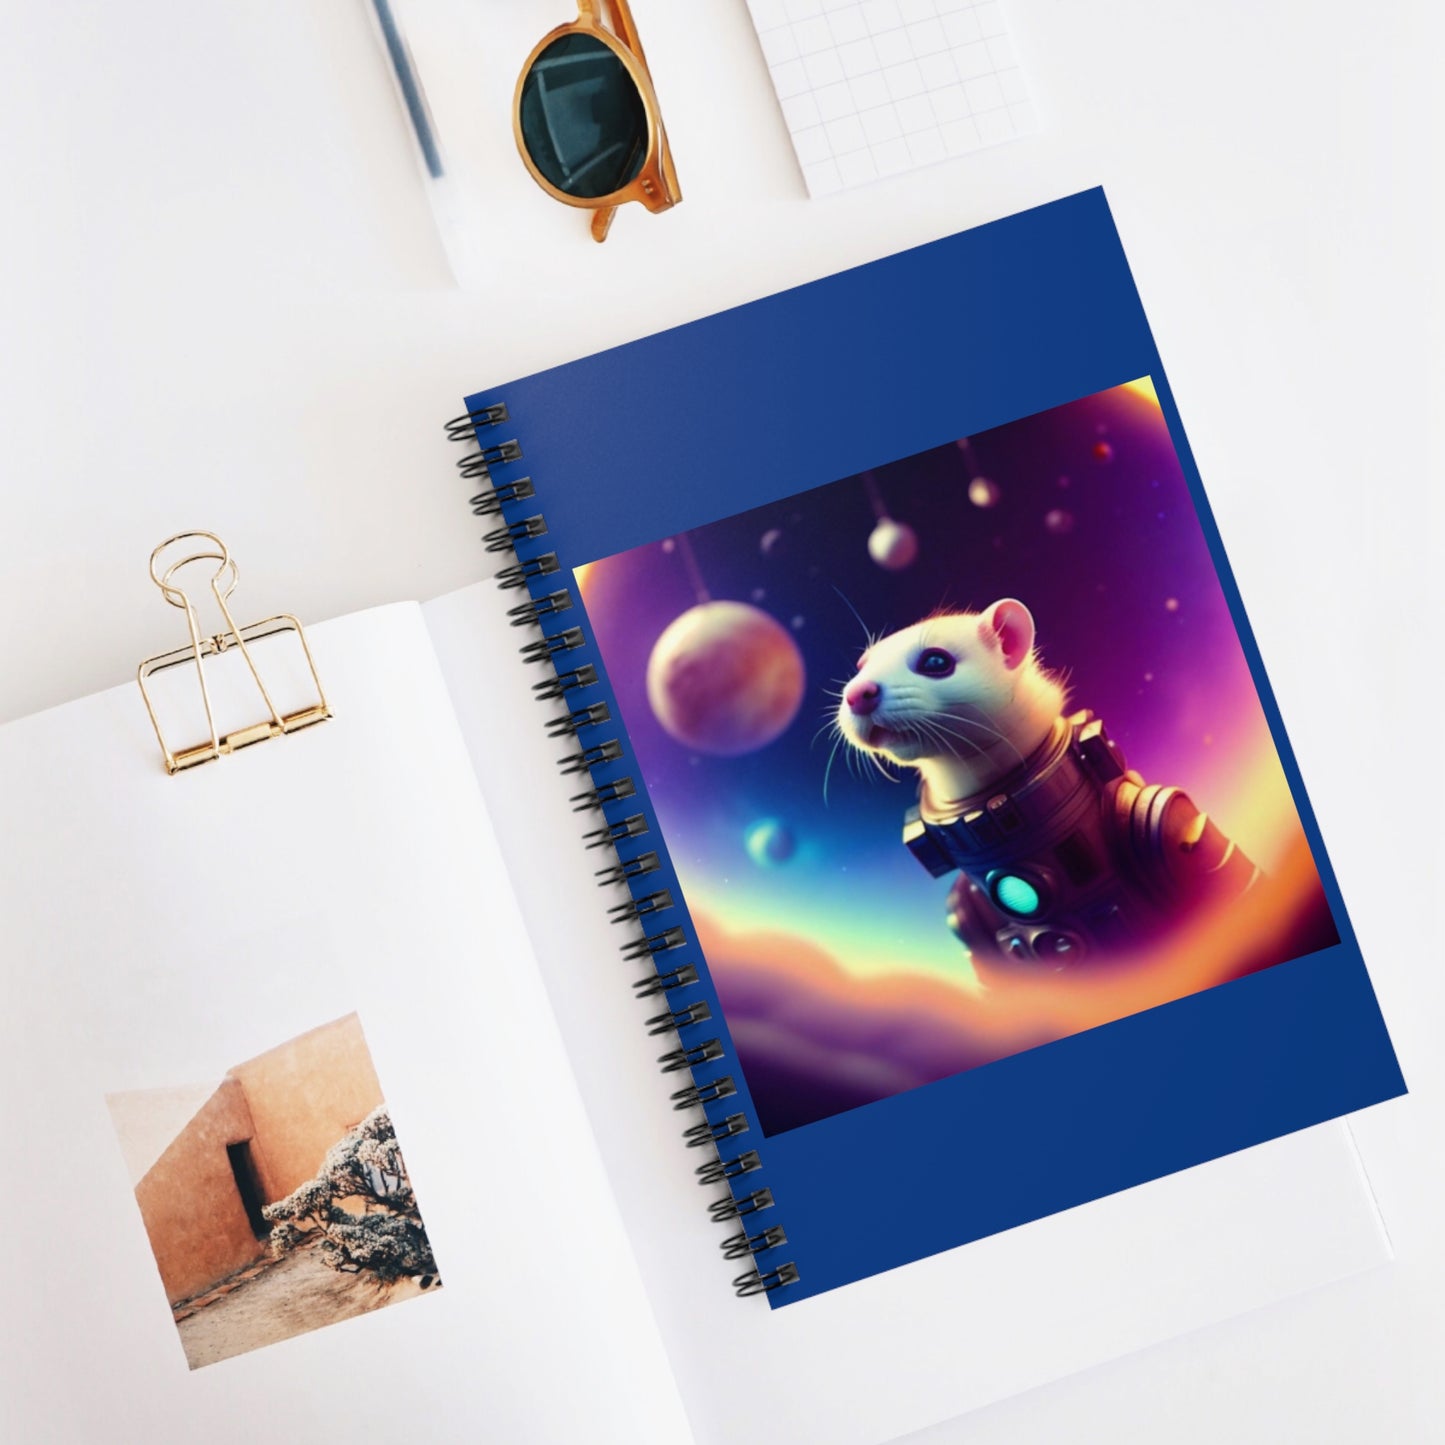 Space Ferret Notebook by Alial Galaxy!